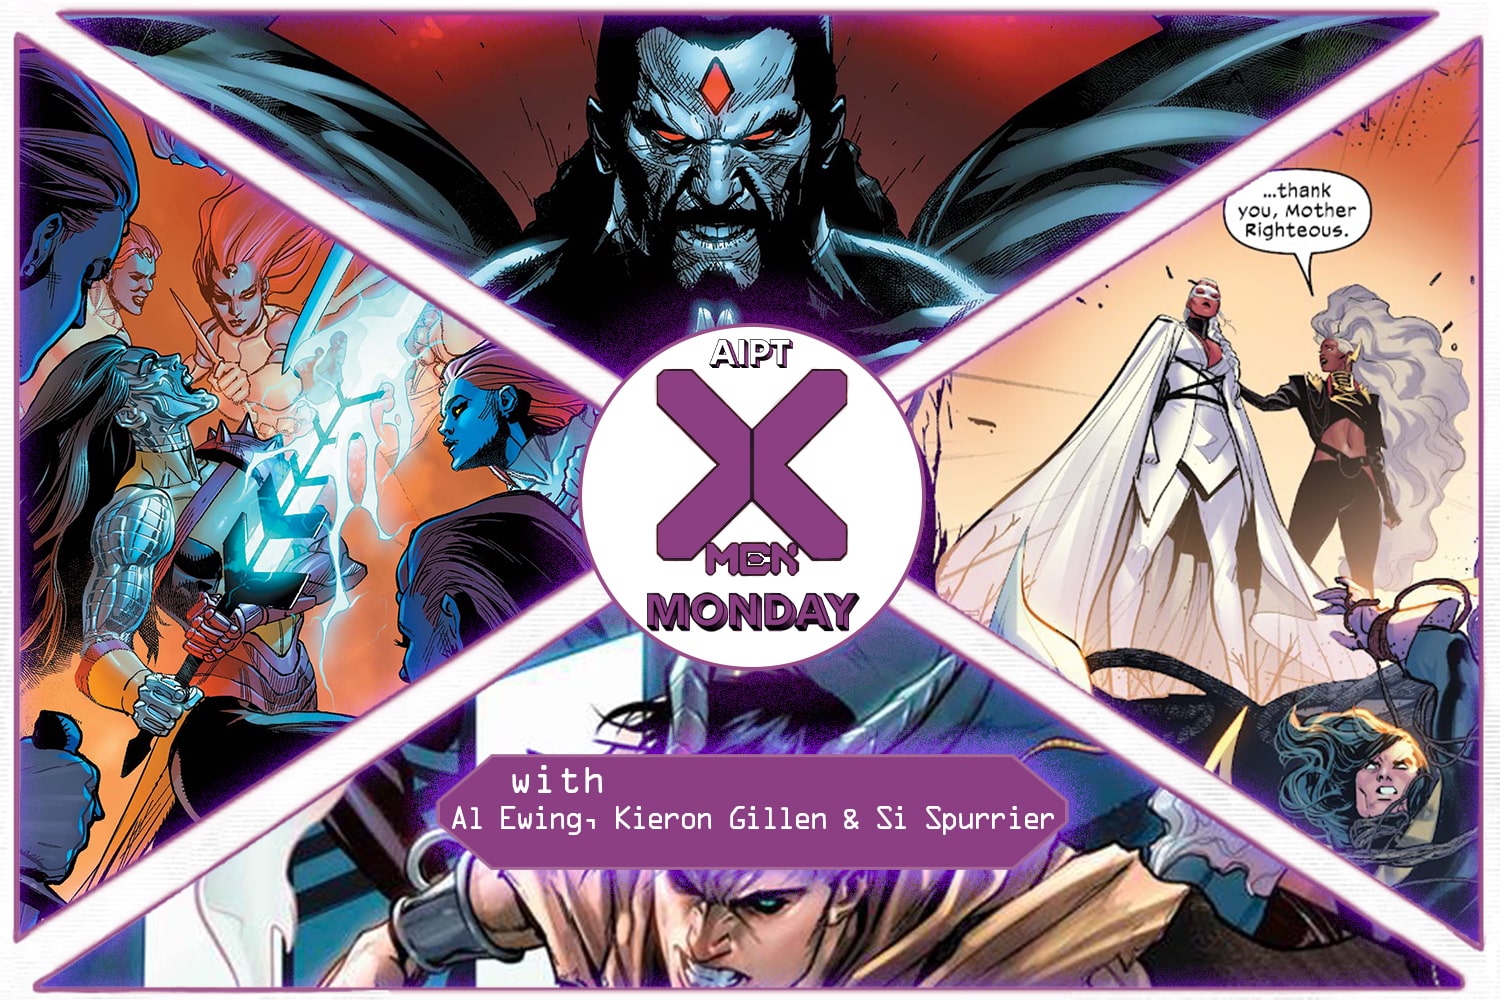 X-Men Monday #203 - Al Ewing, Kieron Gillen & Si Spurrier Reflect on Sins of Sinister